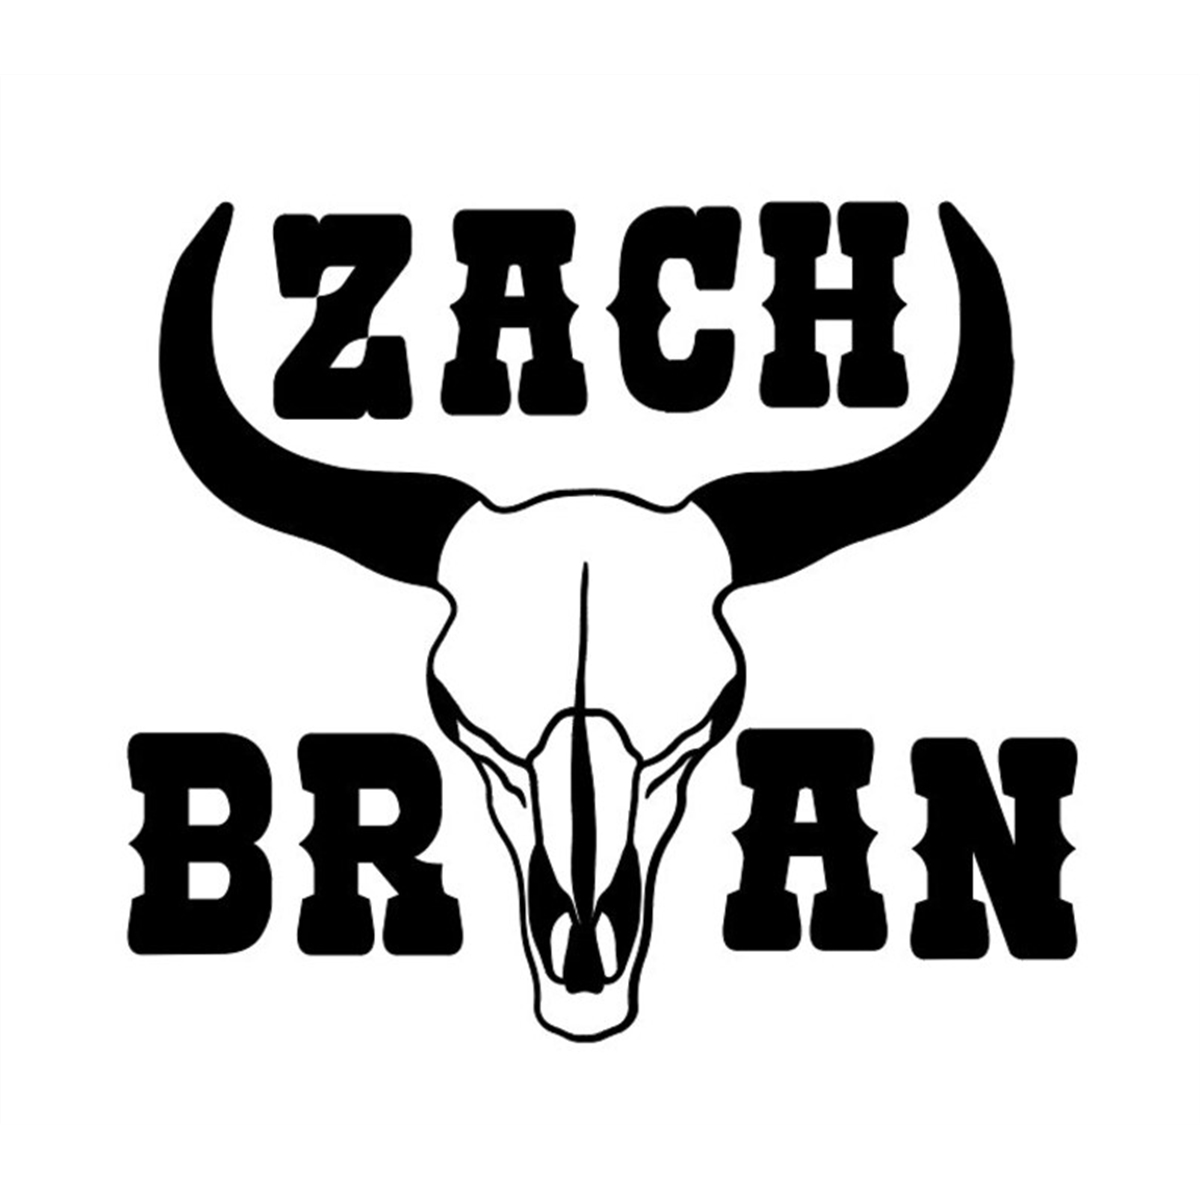 zach-bryan-svg-zach-bryans-name-svg-country-music-image-1